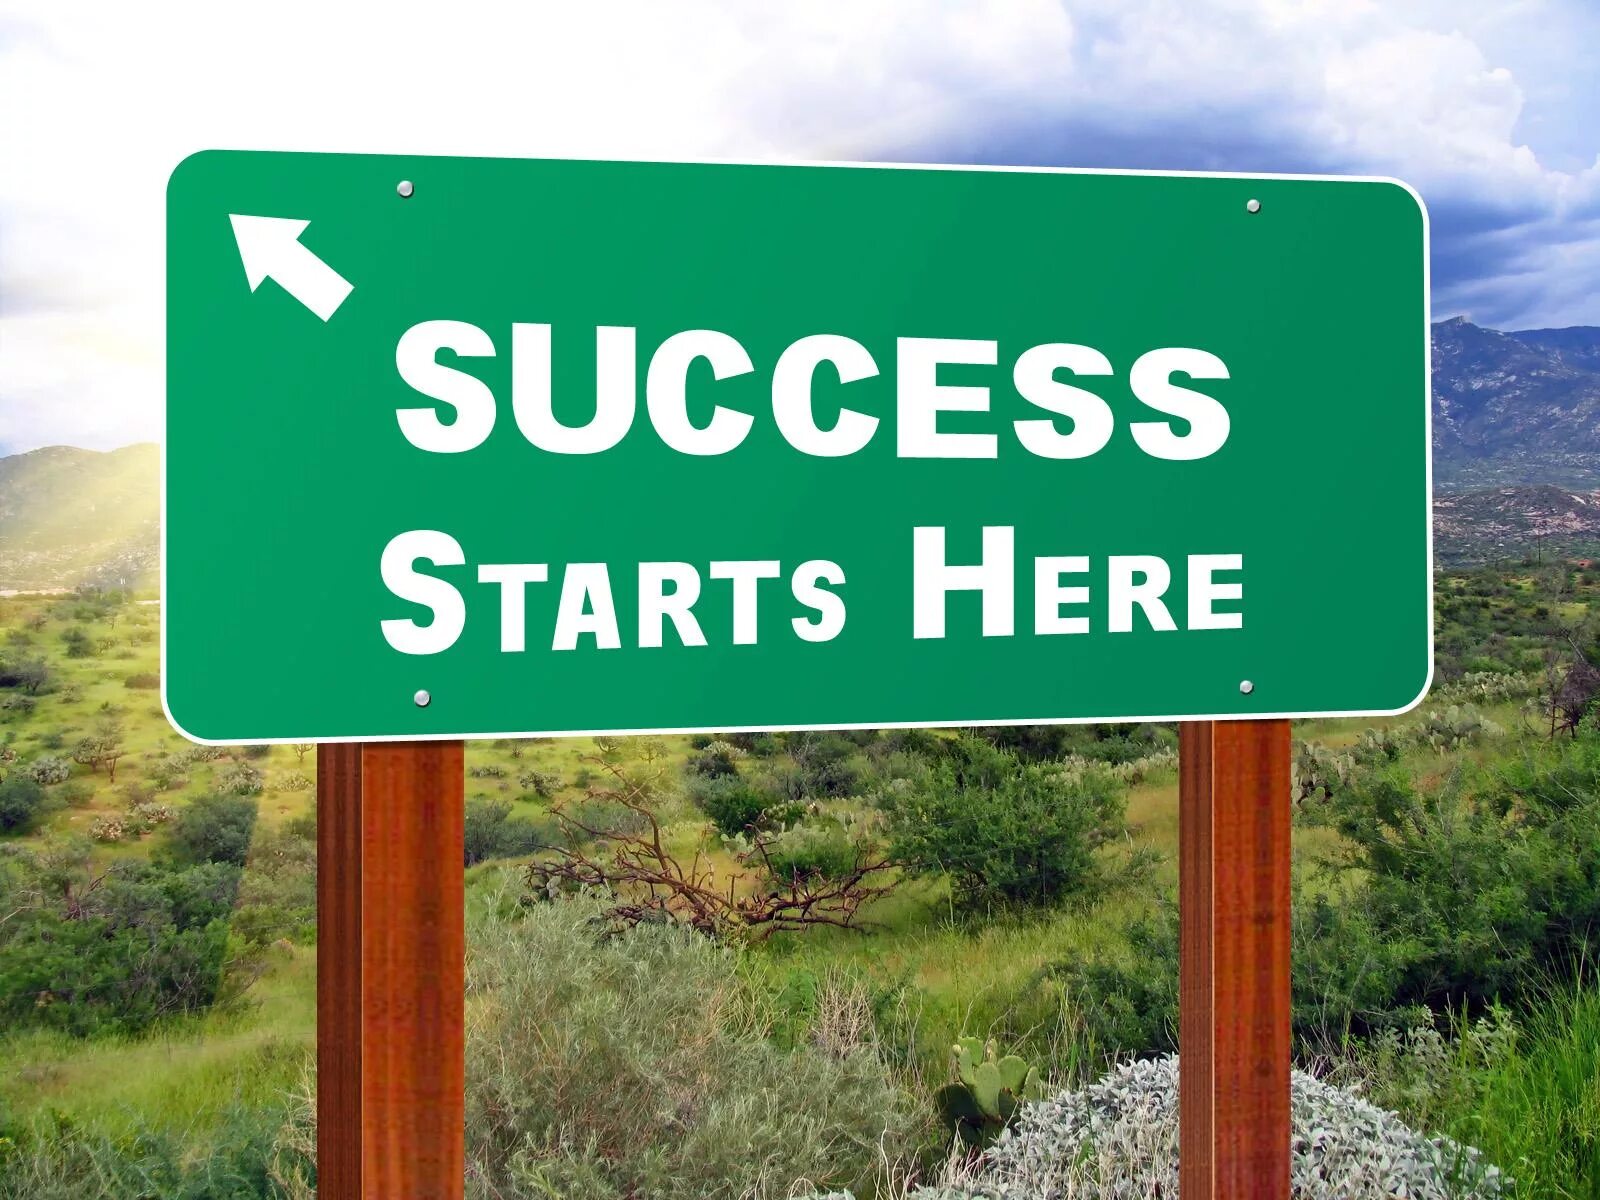 Success. Start success. Success is here. Start here. Successful start